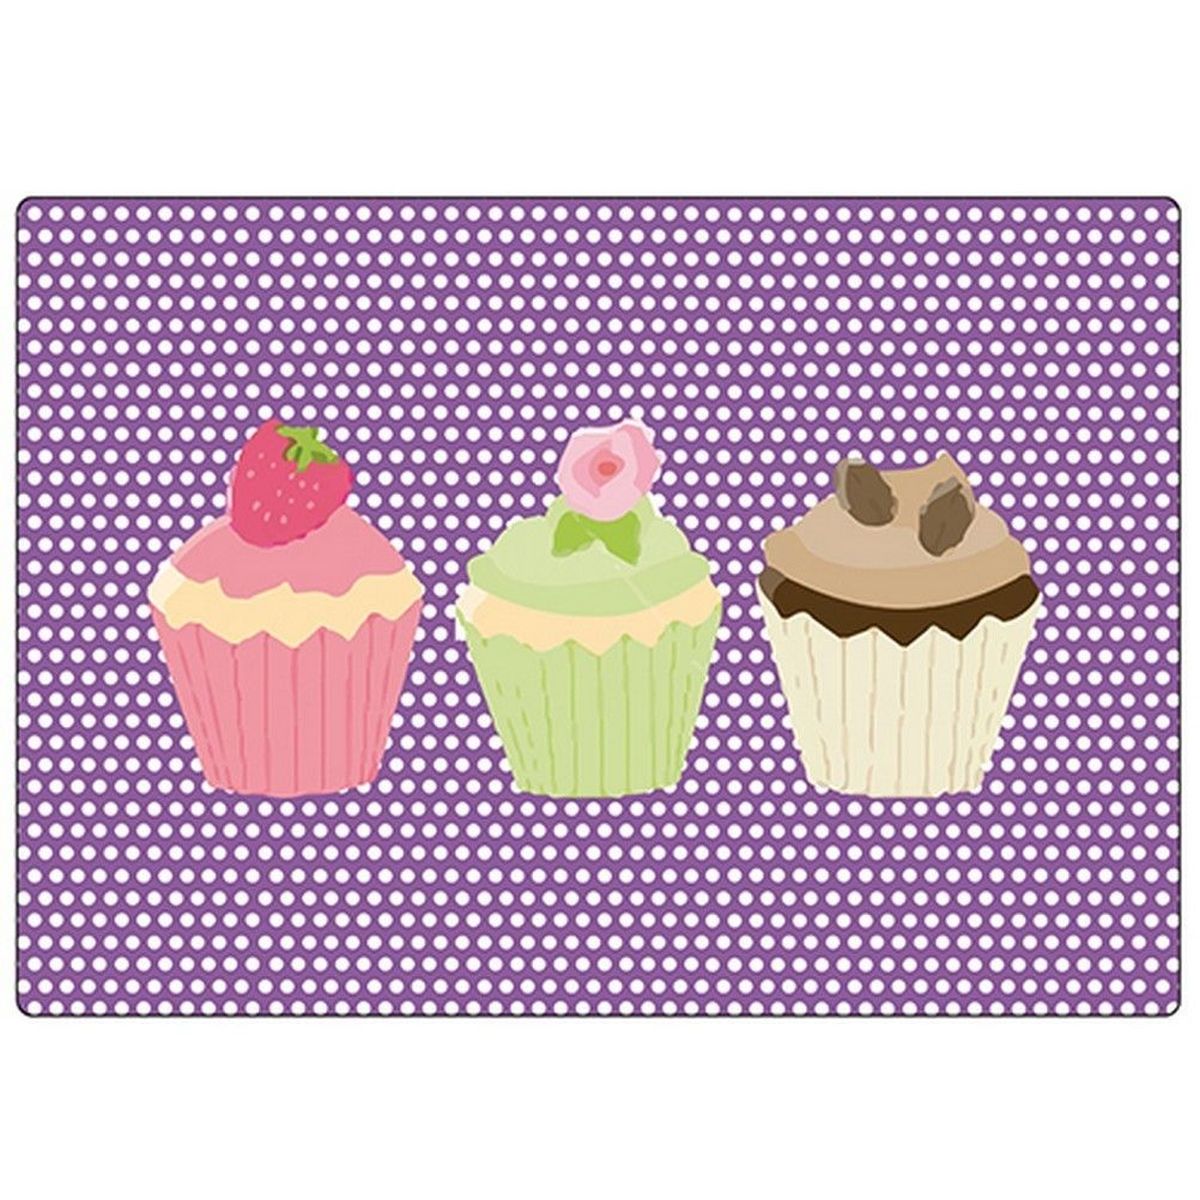 Tapis de souris 3 cupcakes by Cbkreation